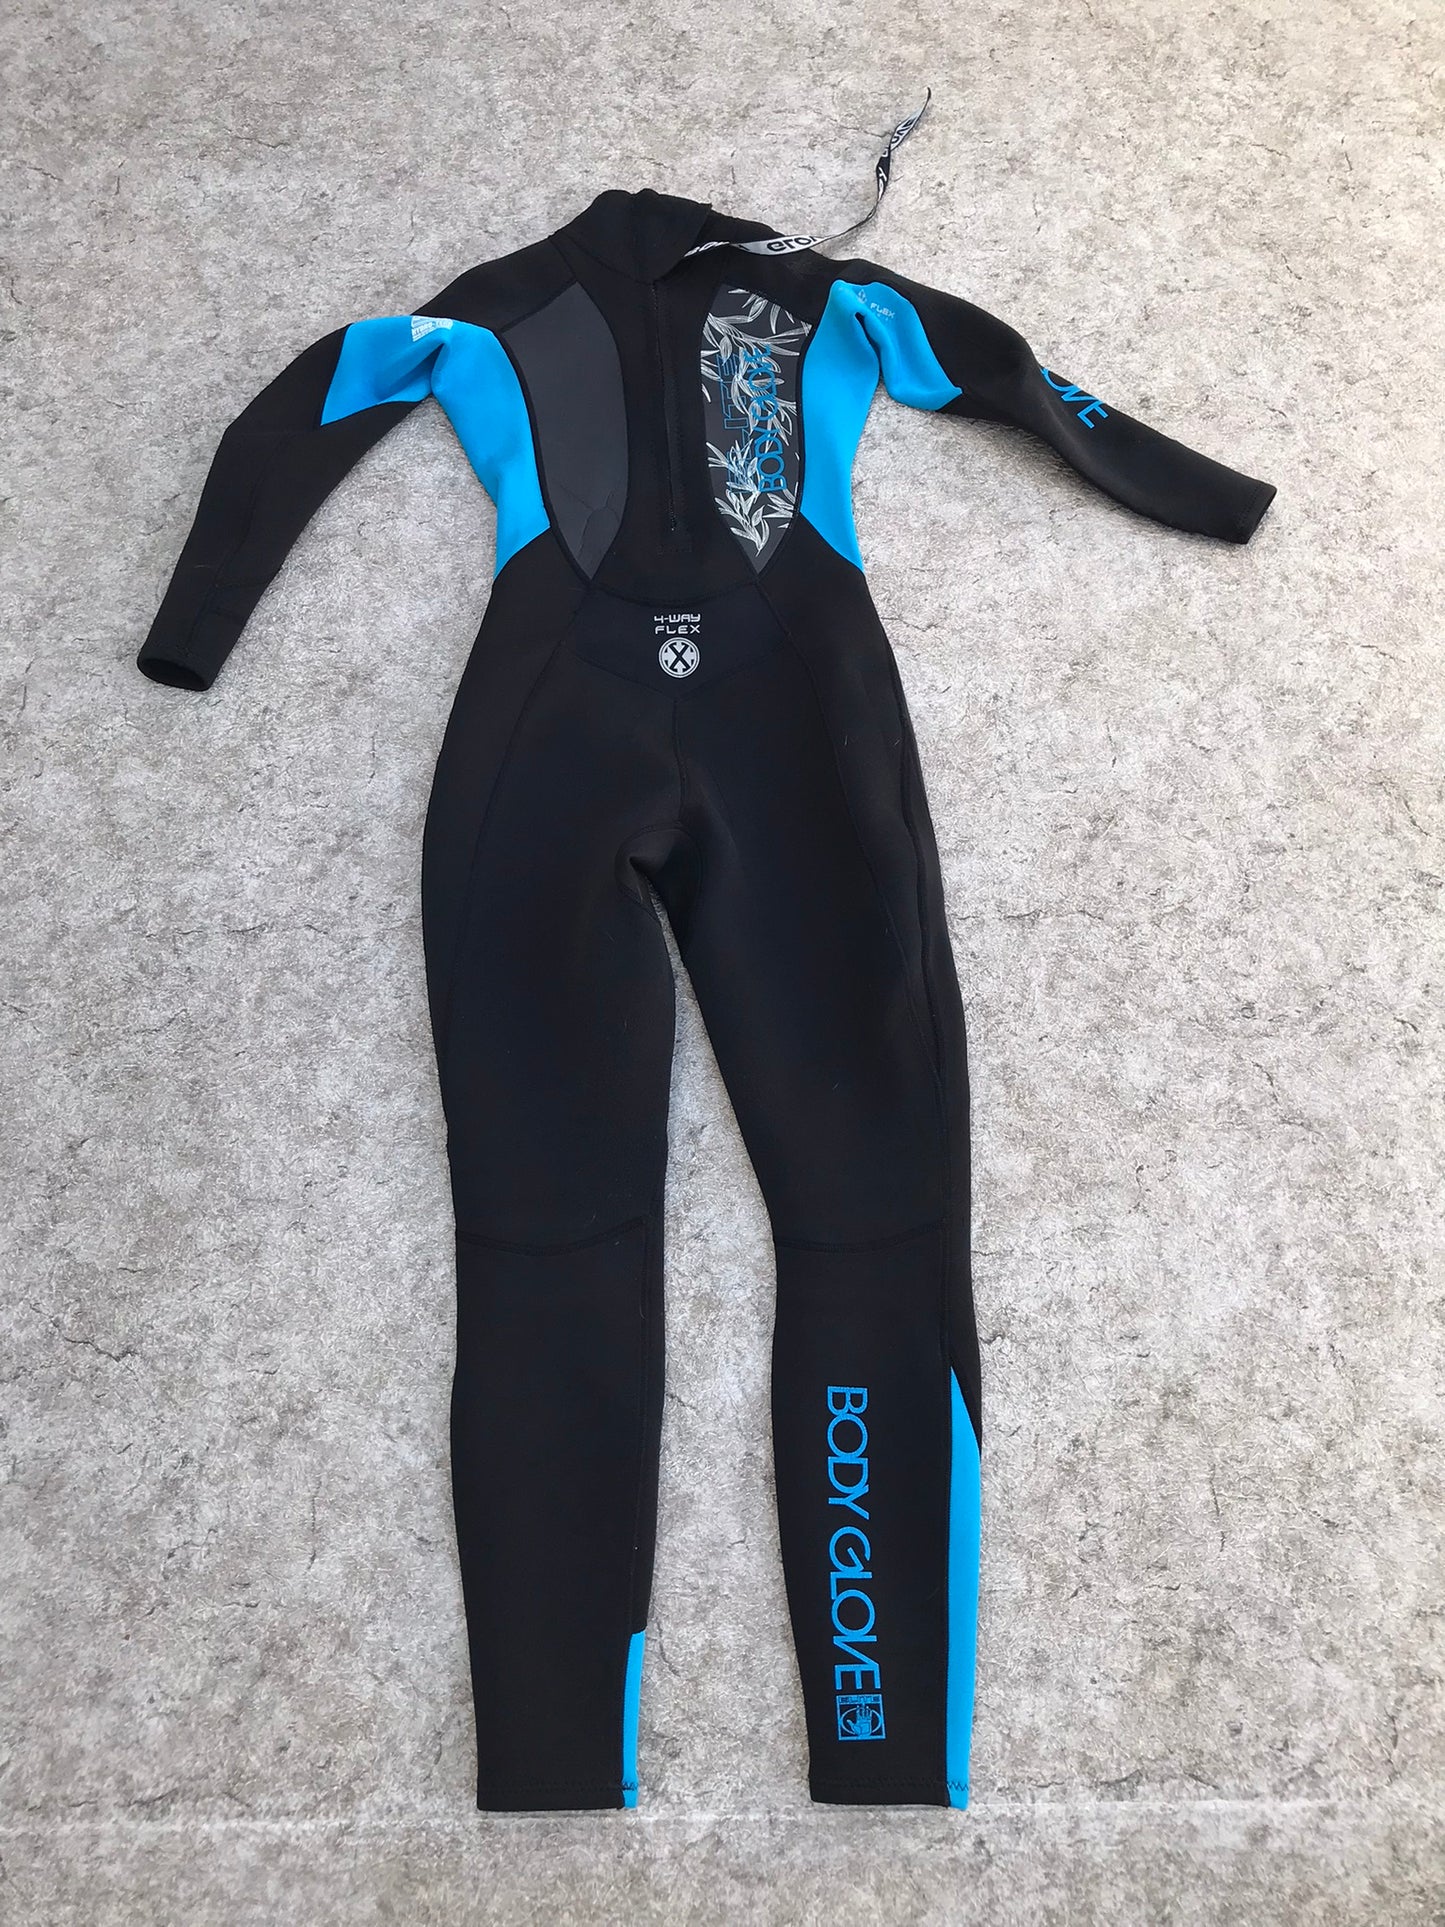 Wetsuit Ladies Size Medium Full Body Glove 3 mm Neoprene Black Blue Surf Dive